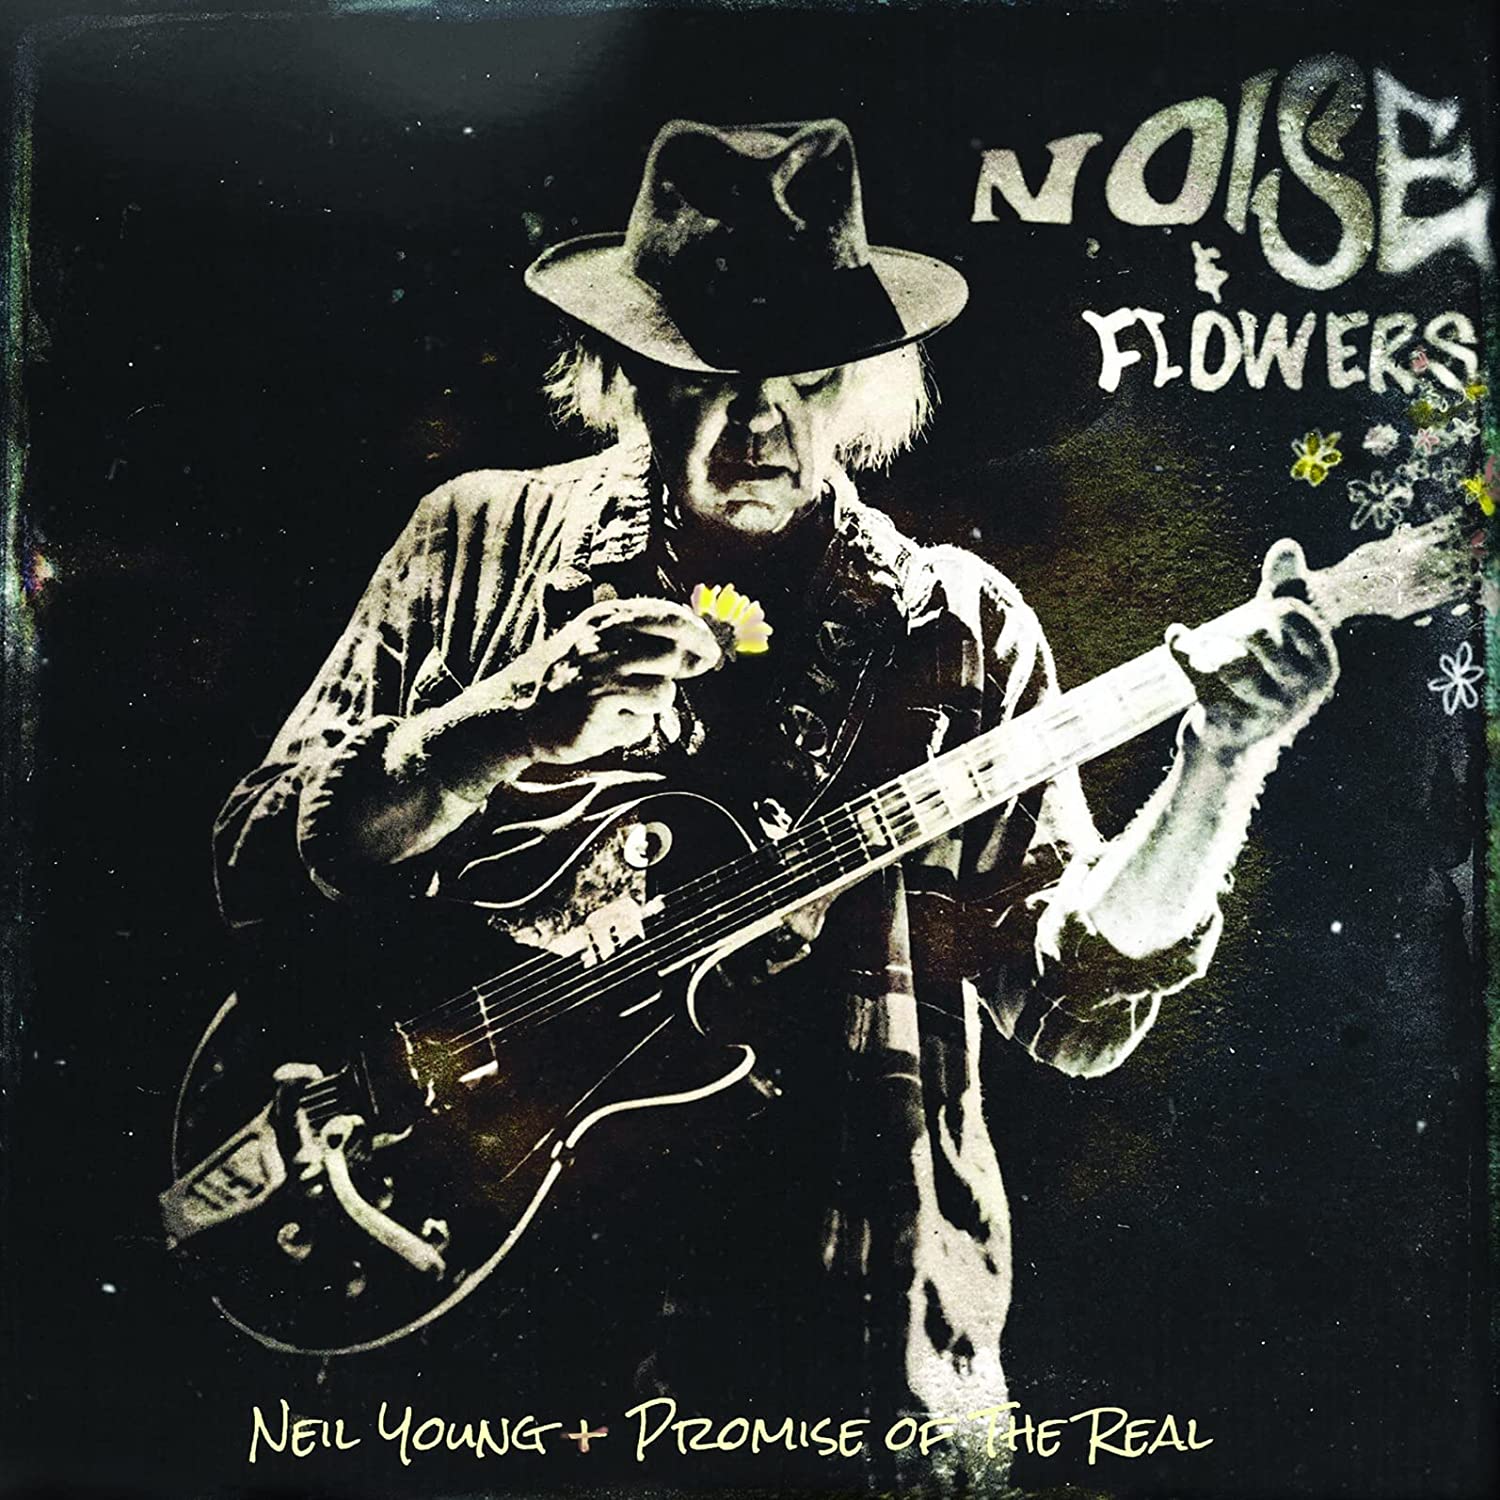 Neil Young - Noise & Flowers (Vinyl 2LP, CD, Blu-ray Box Set)